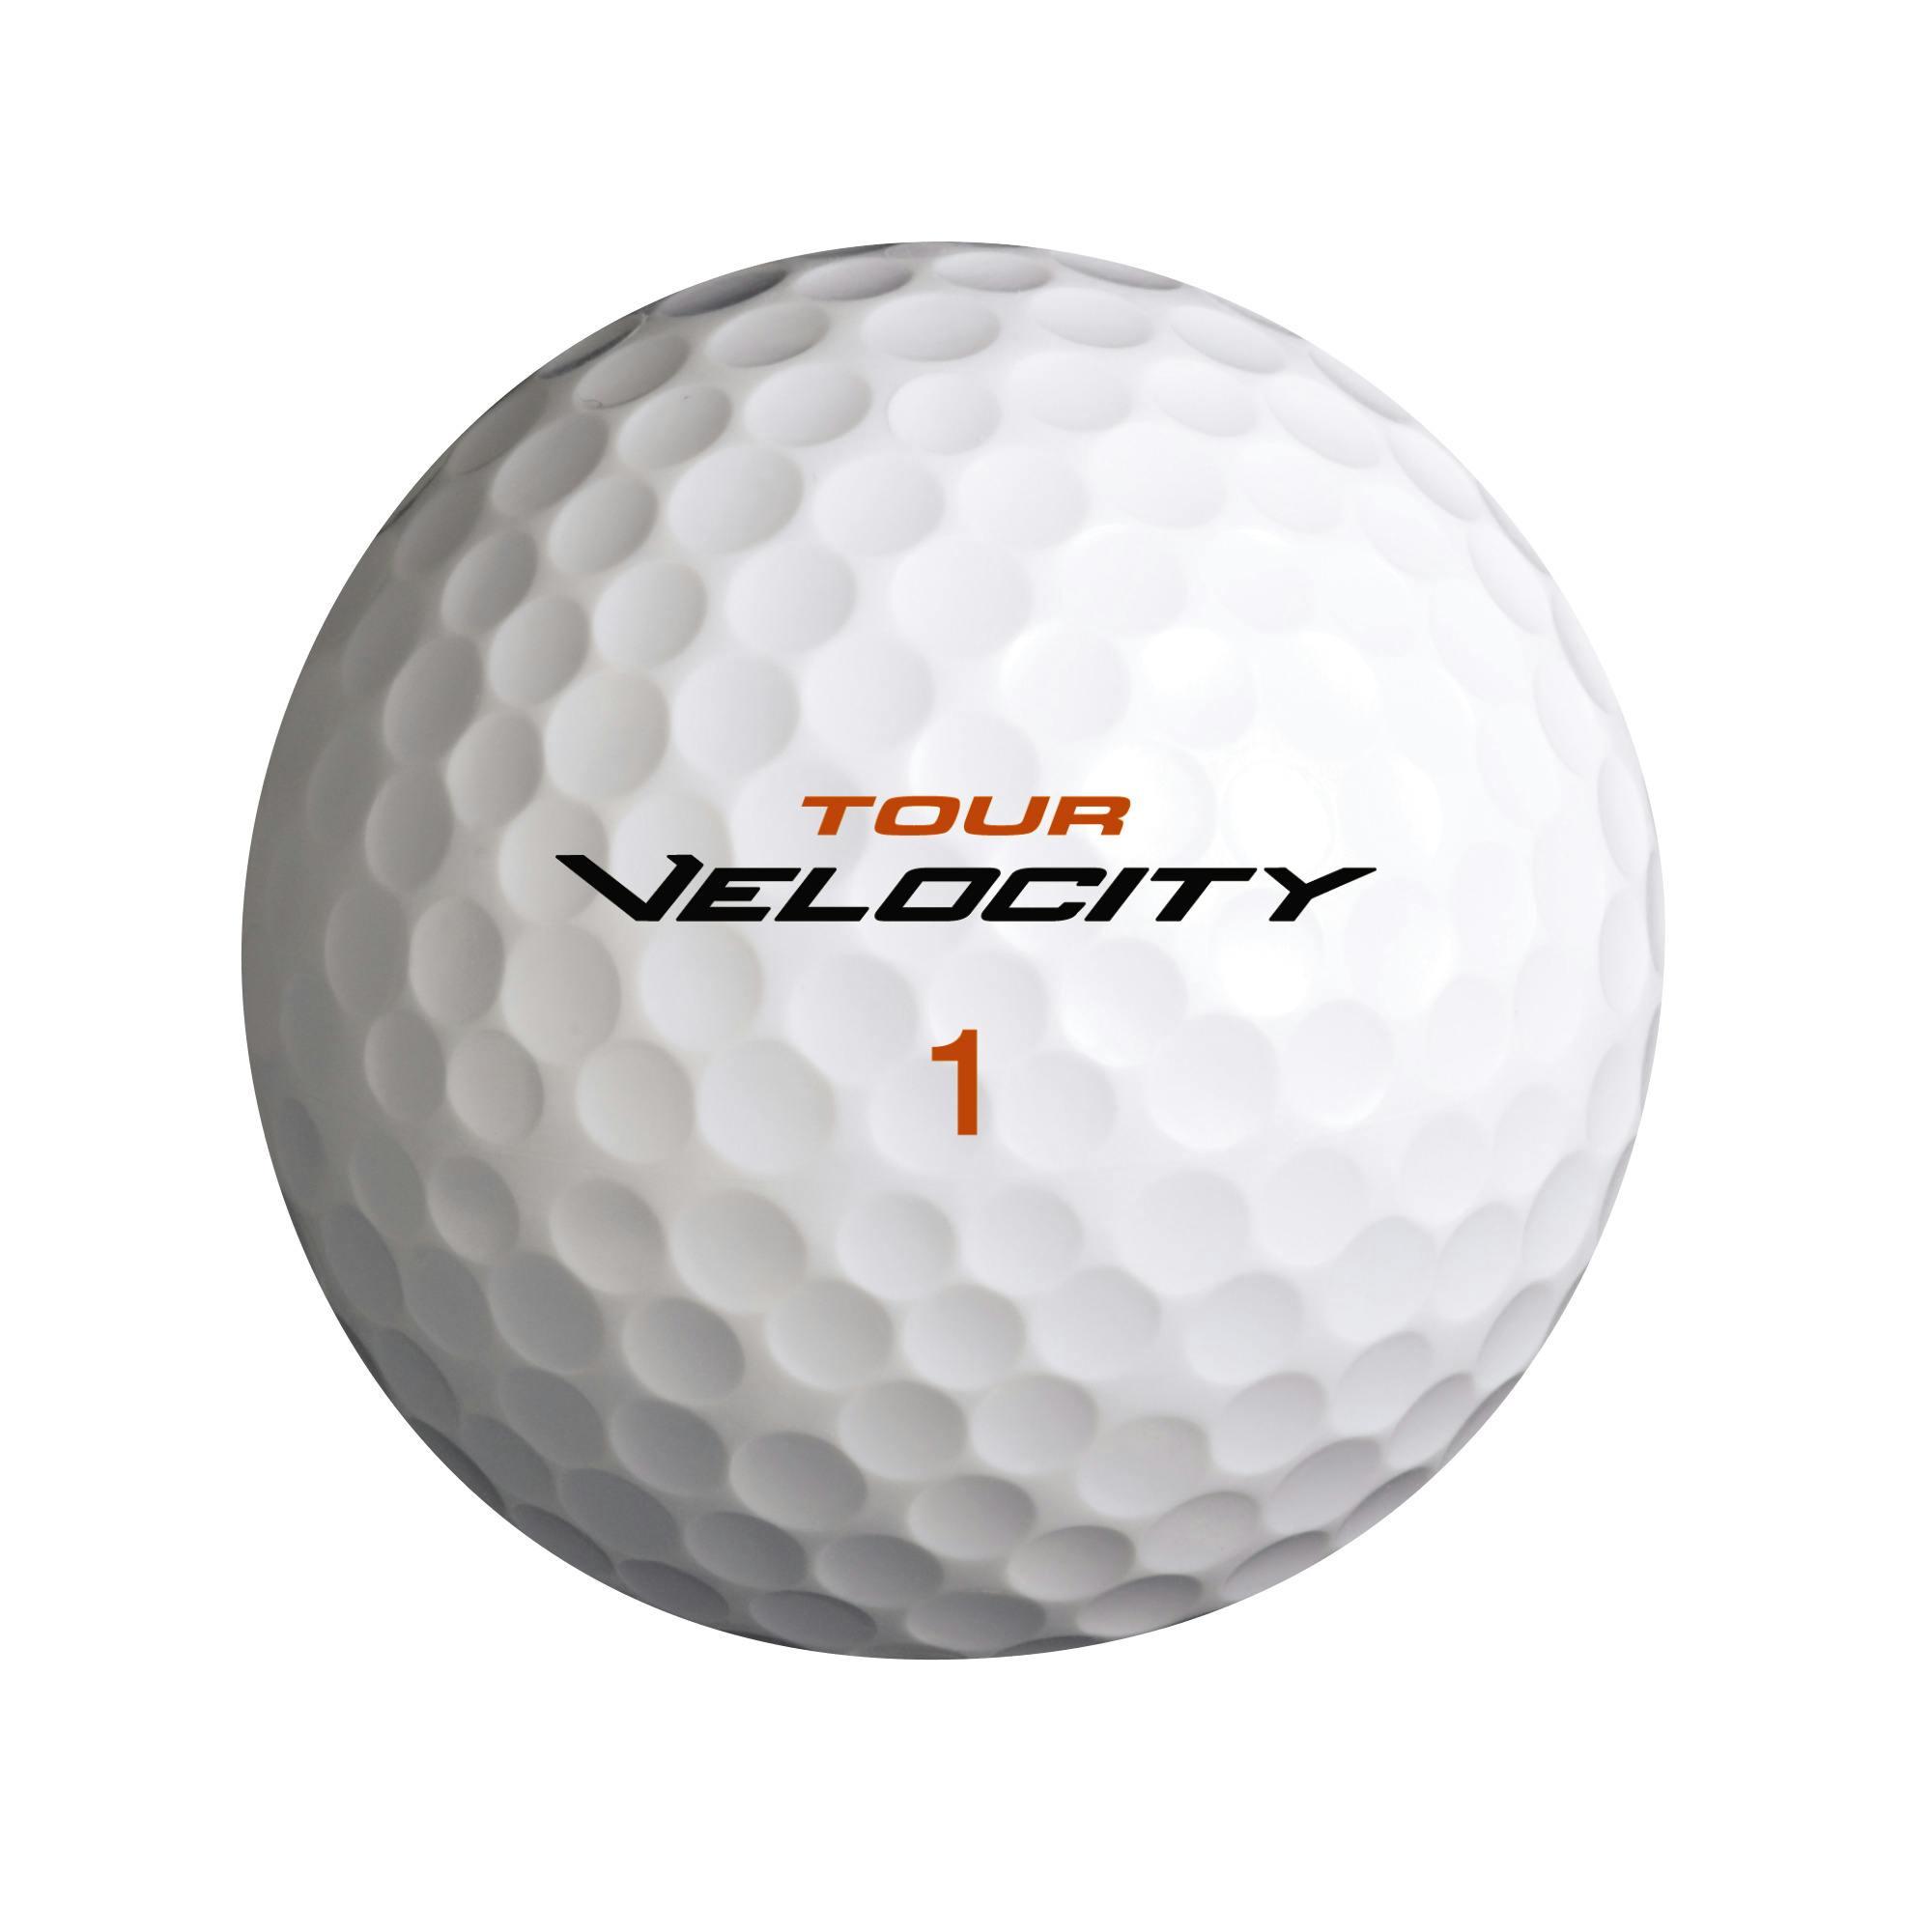 Wilson 2022 Tour Velocity Distance Golf Balls · White